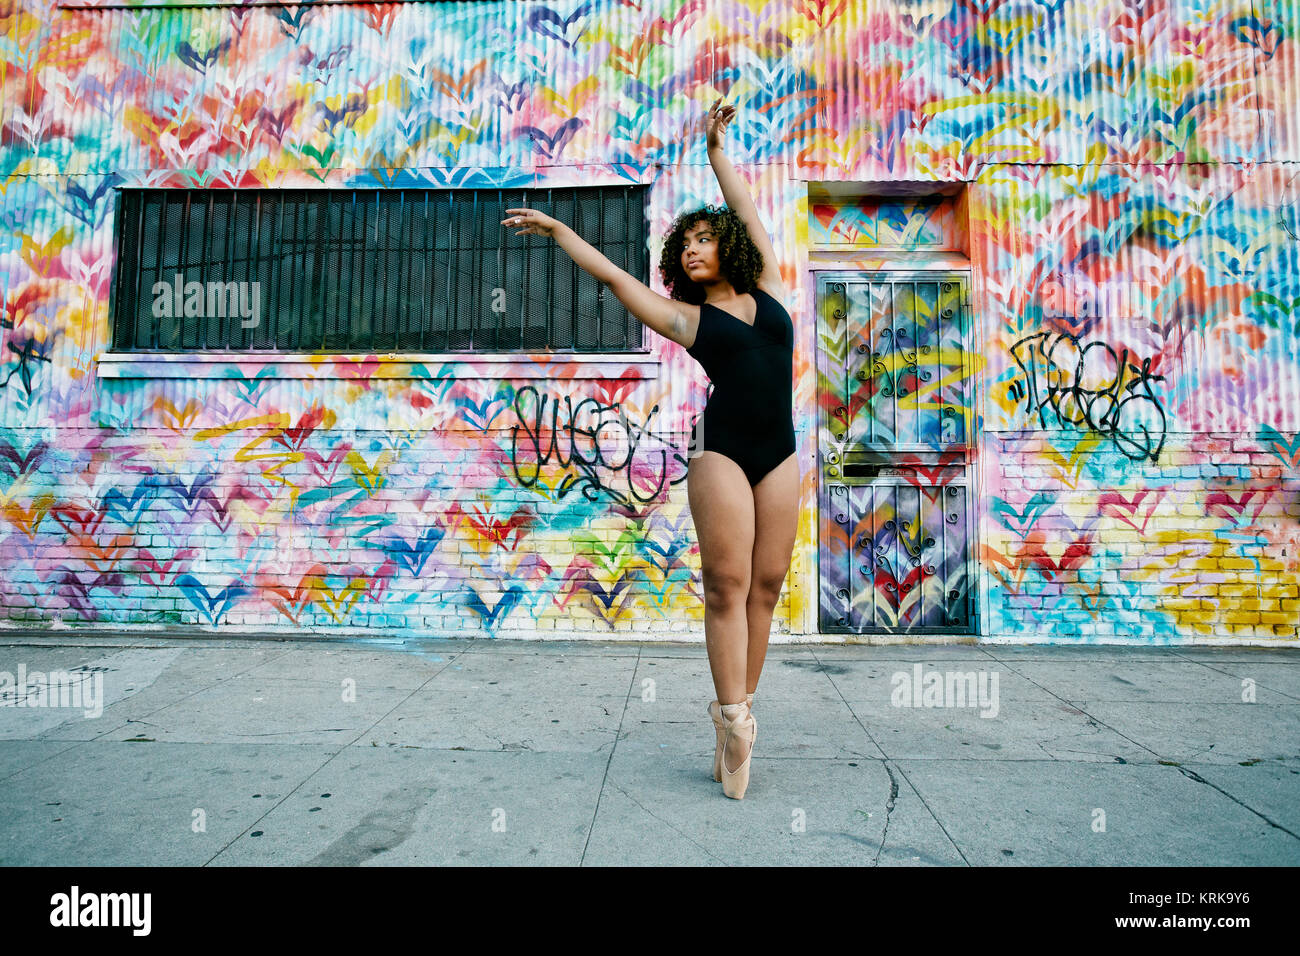 Mixed race ballet dancer on sidewalk Stock Photo